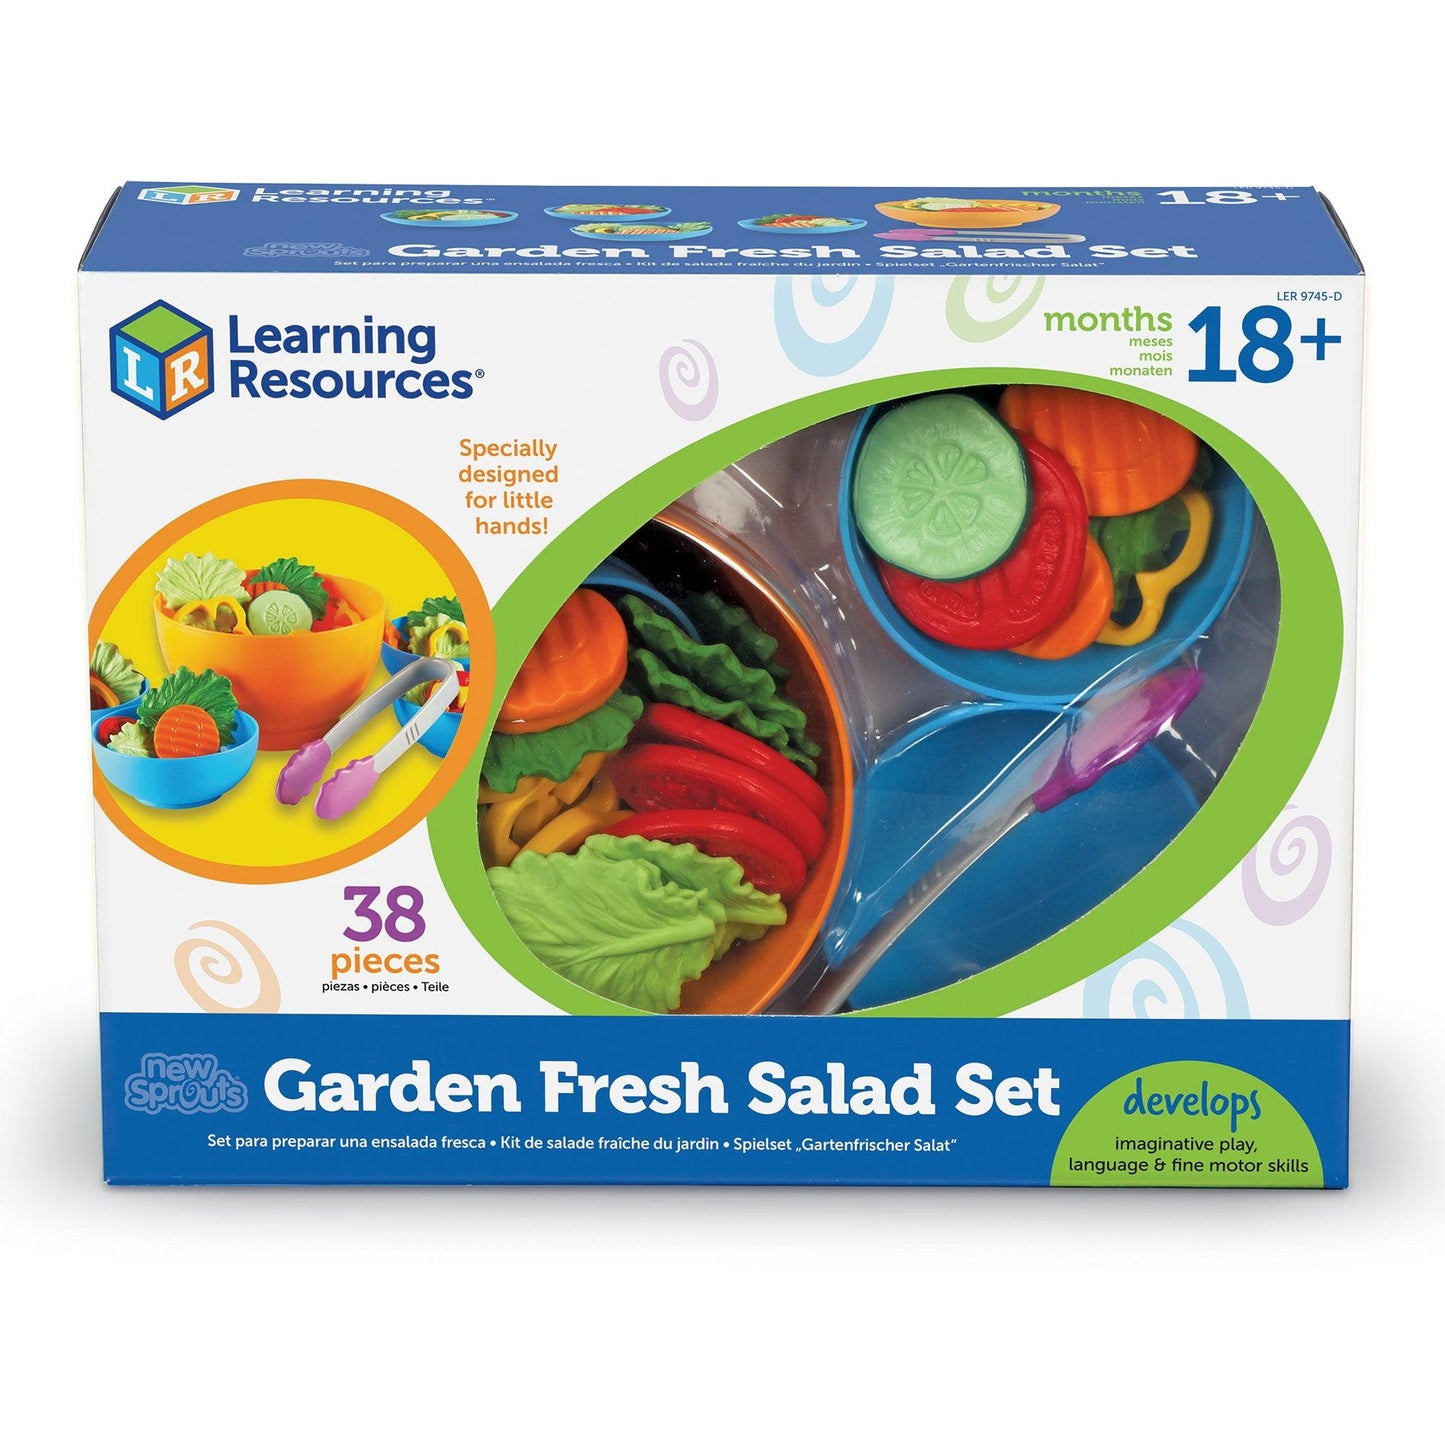 New Sprouts® Garden Fresh Salad Set - Loomini